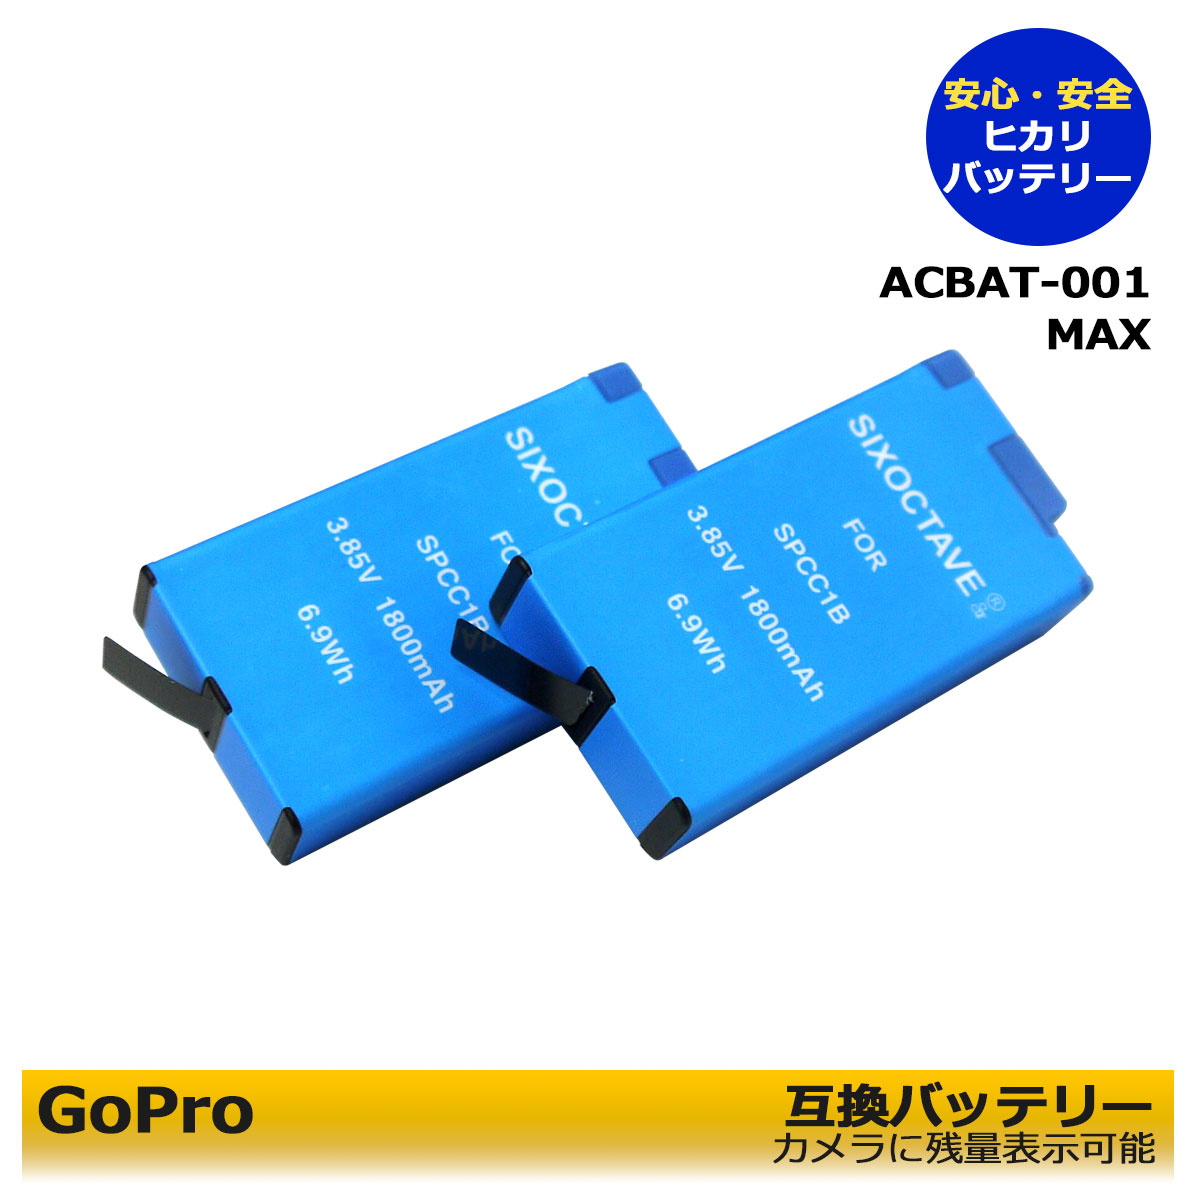 ACBAT-001 残量表示可能 【あす楽対応】ゴープロ GoPro MAX 互換充電池 バッテリー 2個セット純正充電器でも充電可能。SPCC1B  ビデオカメラ GoPro MAX ”安心6ヵ月保障！” ヒカリバッテリー